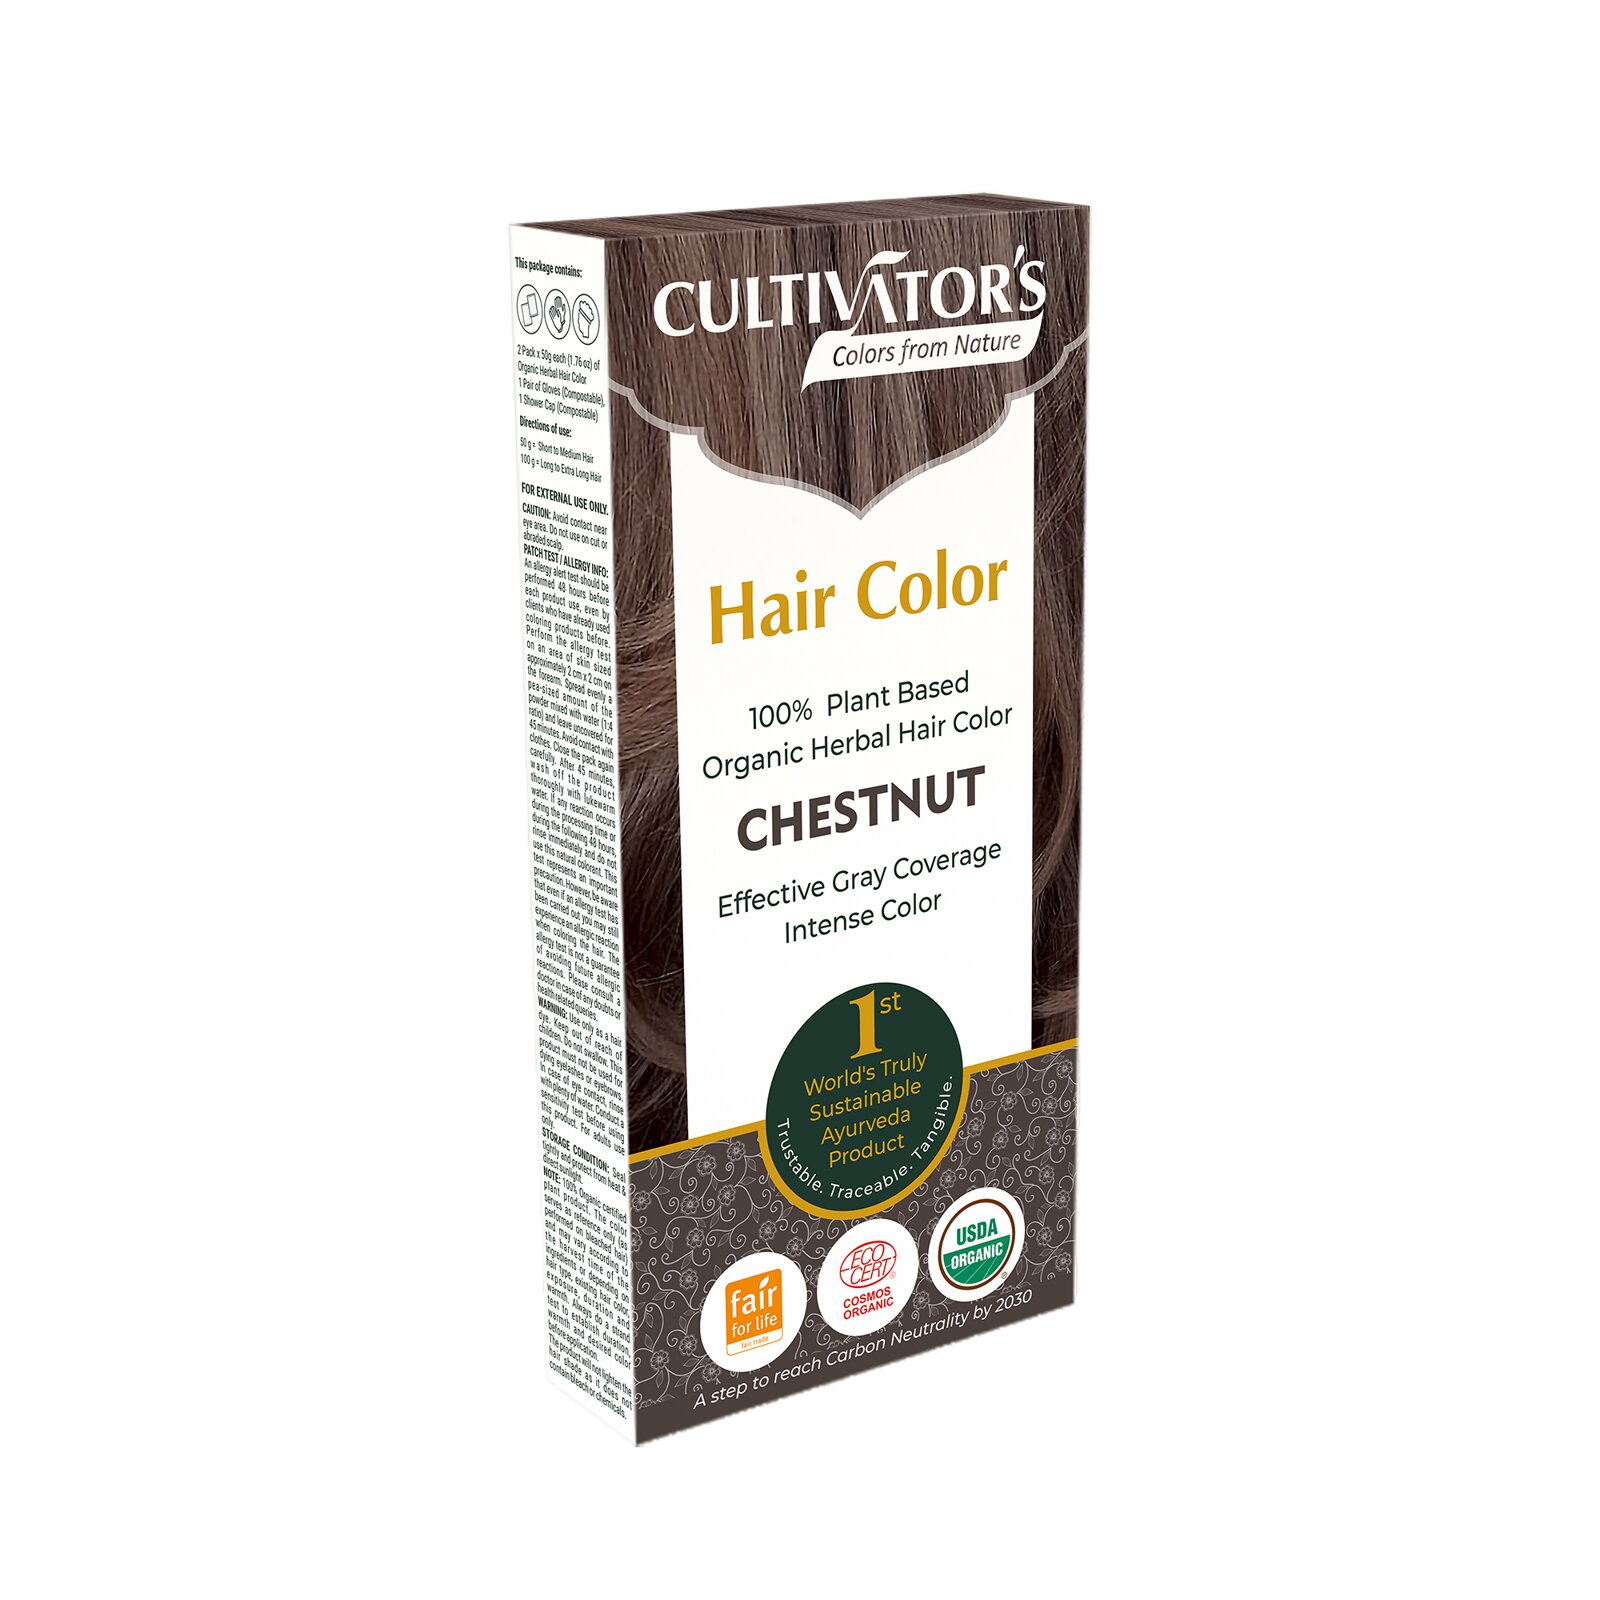 Cultivator's Organic Herbal Hair Color Hiusväri, Chestnut 